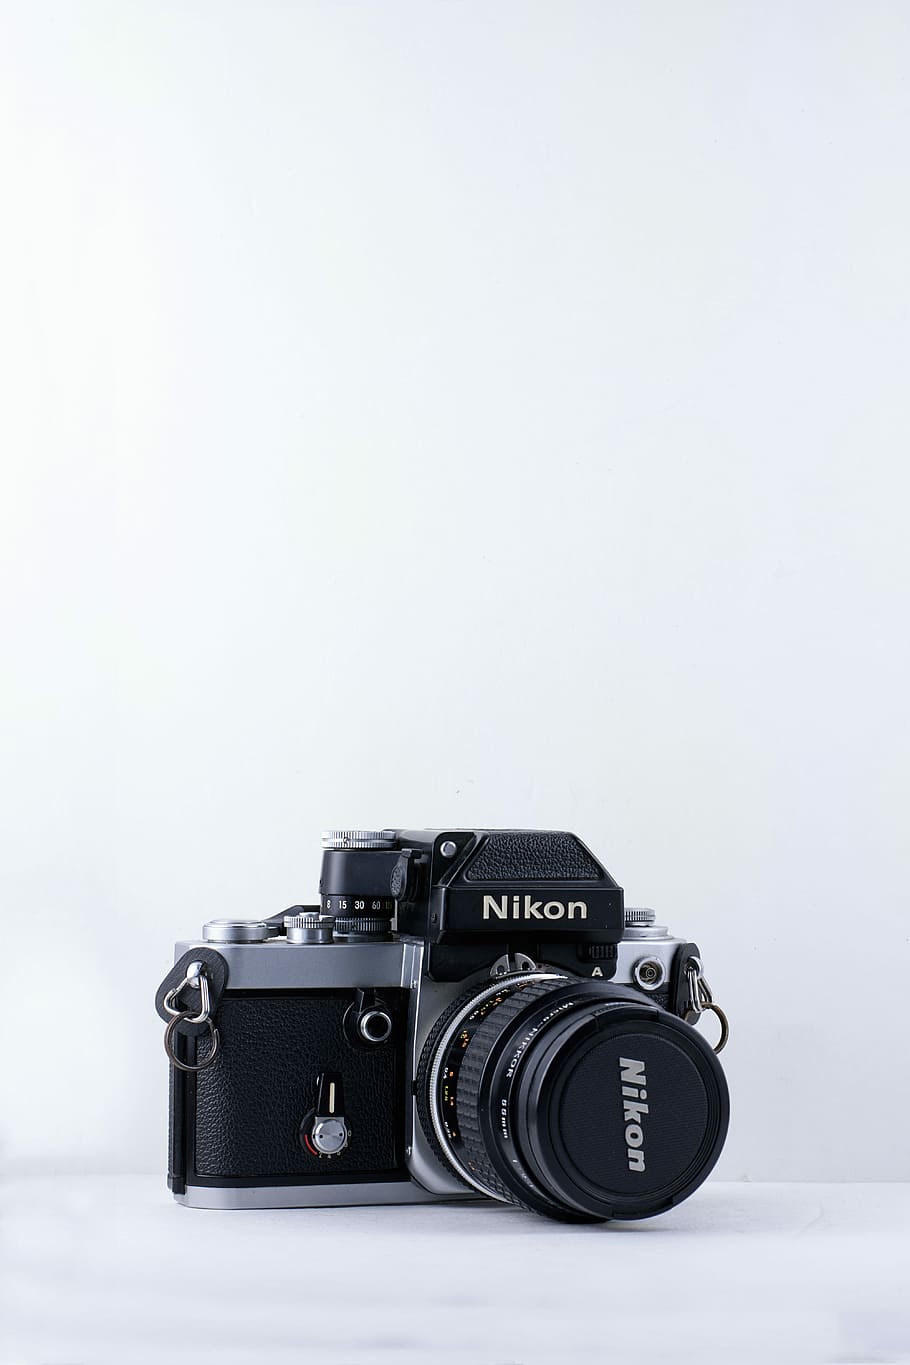 HD wallpaper: black Nikon camera against white background, black ...